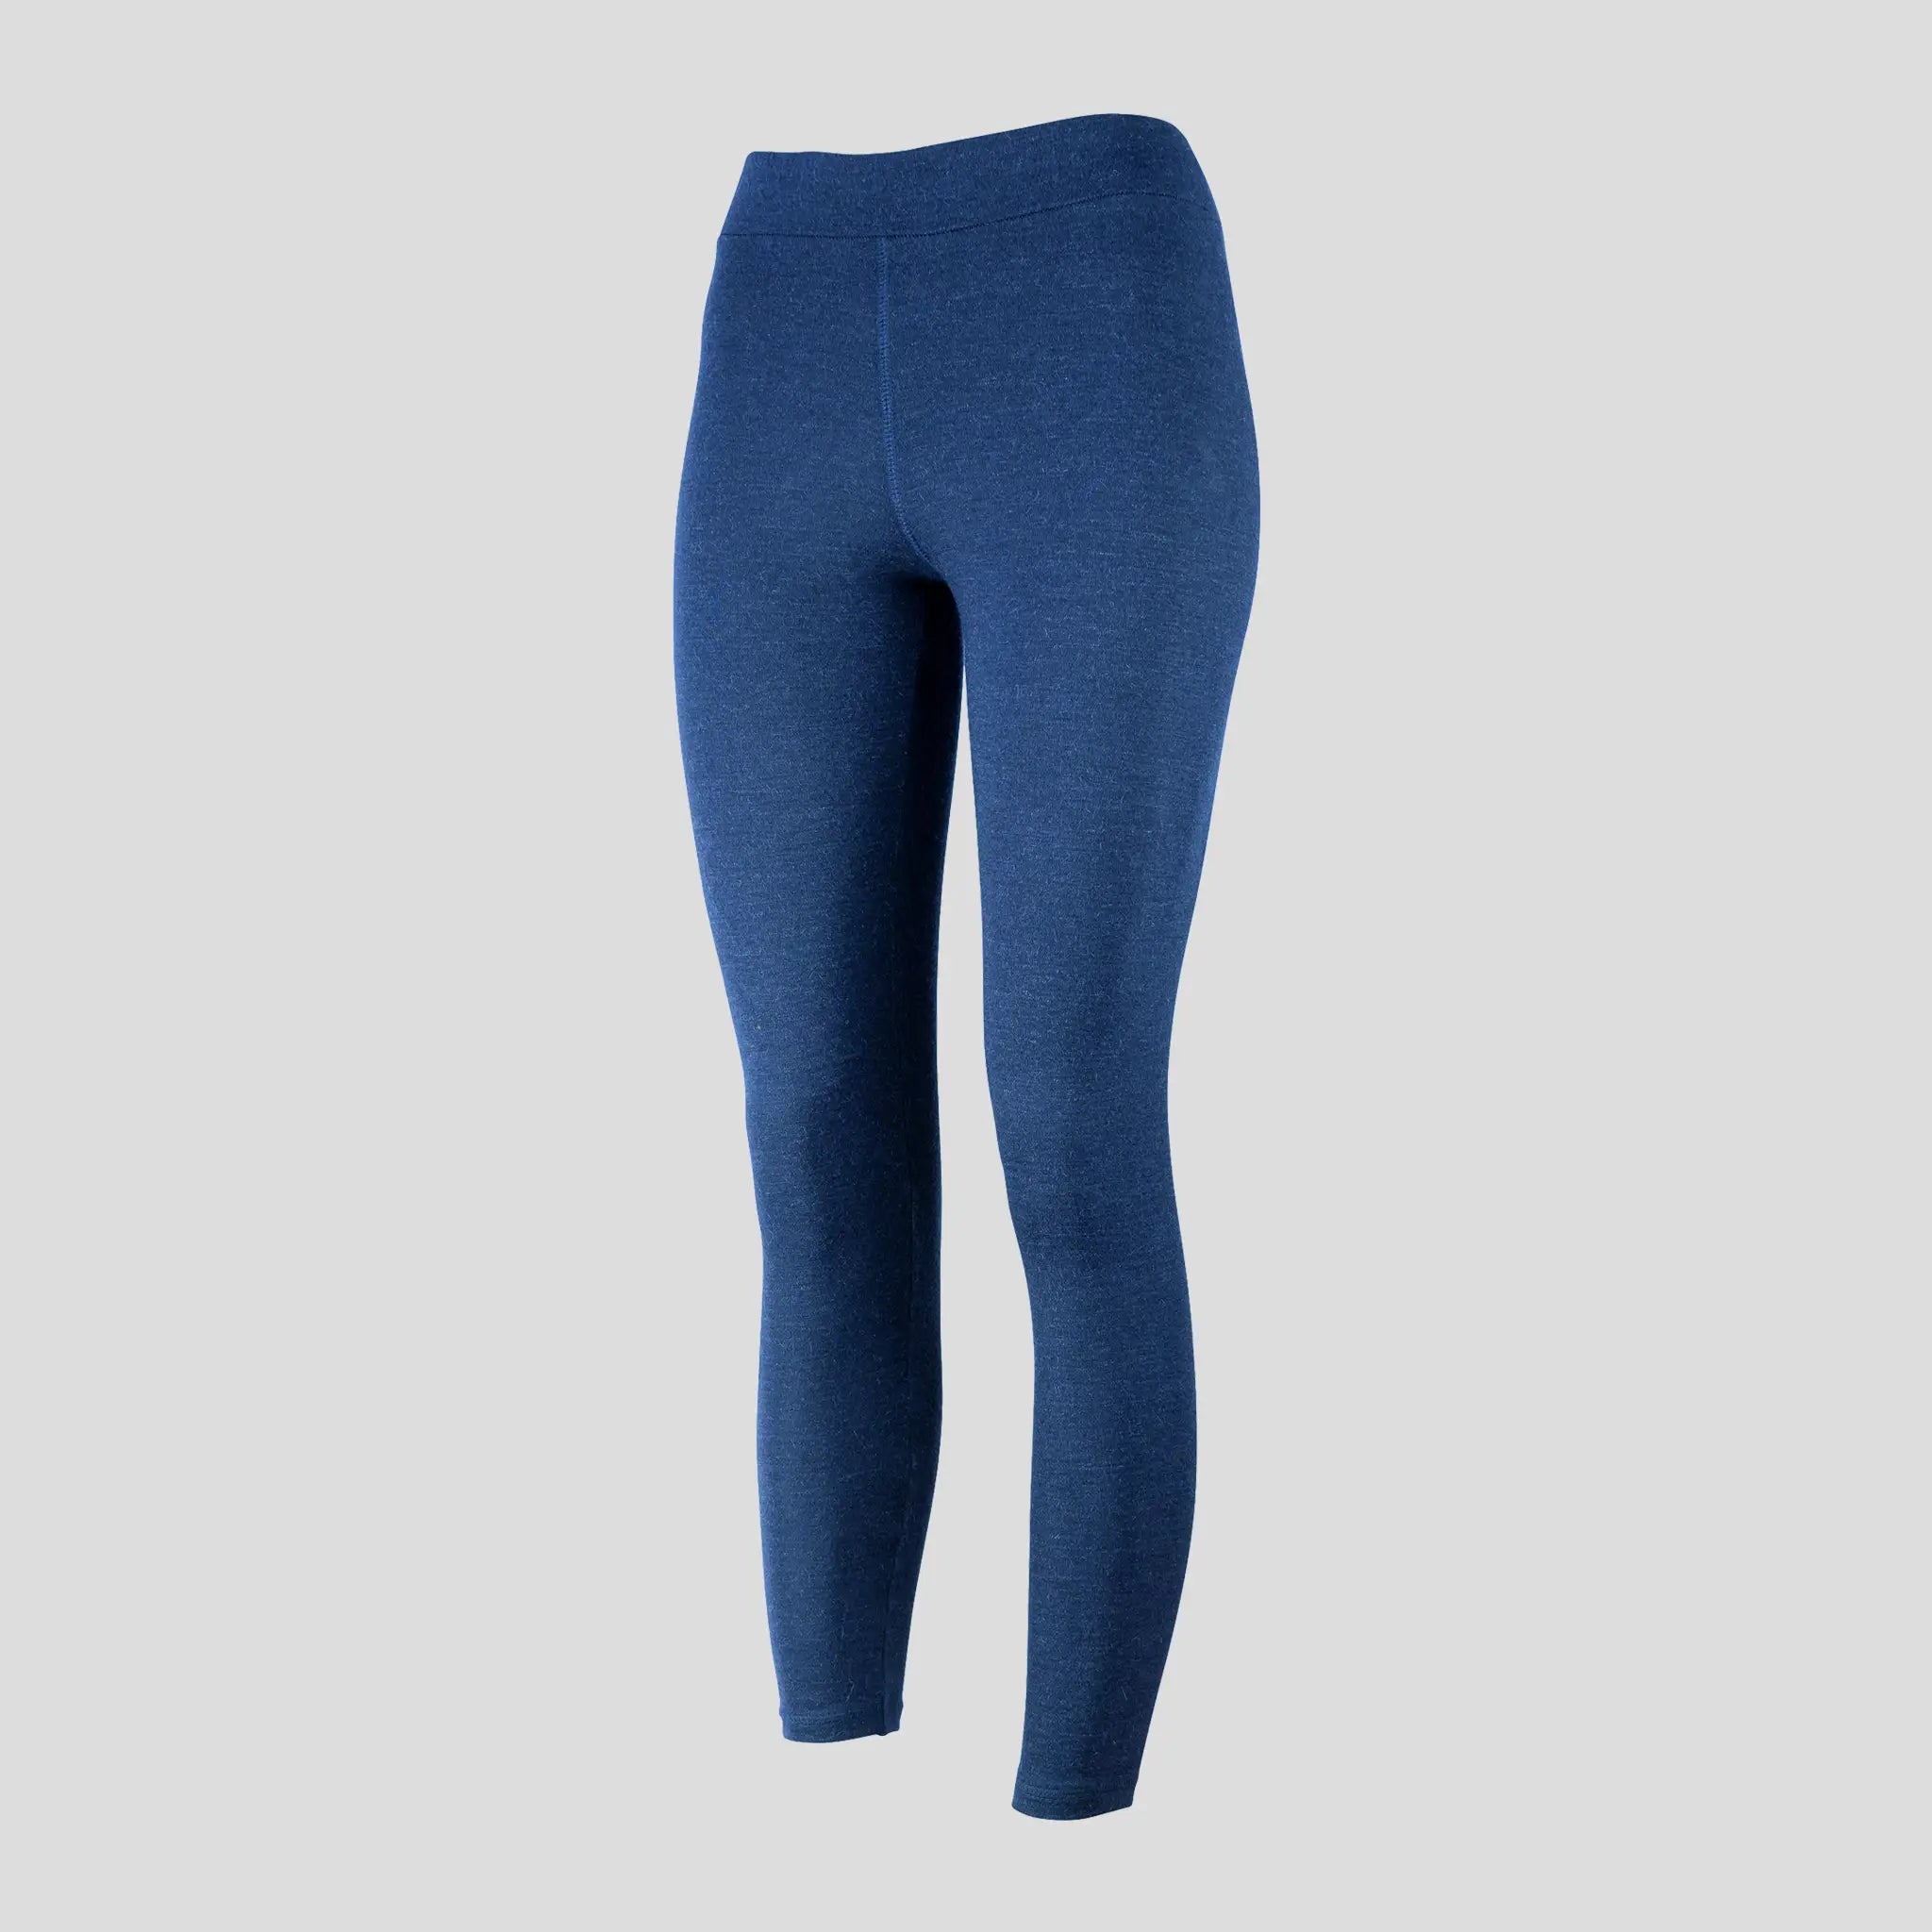 AoA Women's 420 Royal Alpaca Thermal Leggings: Extra Warm & Soft Hiking  Pant Gray Small at  Women's Clothing store